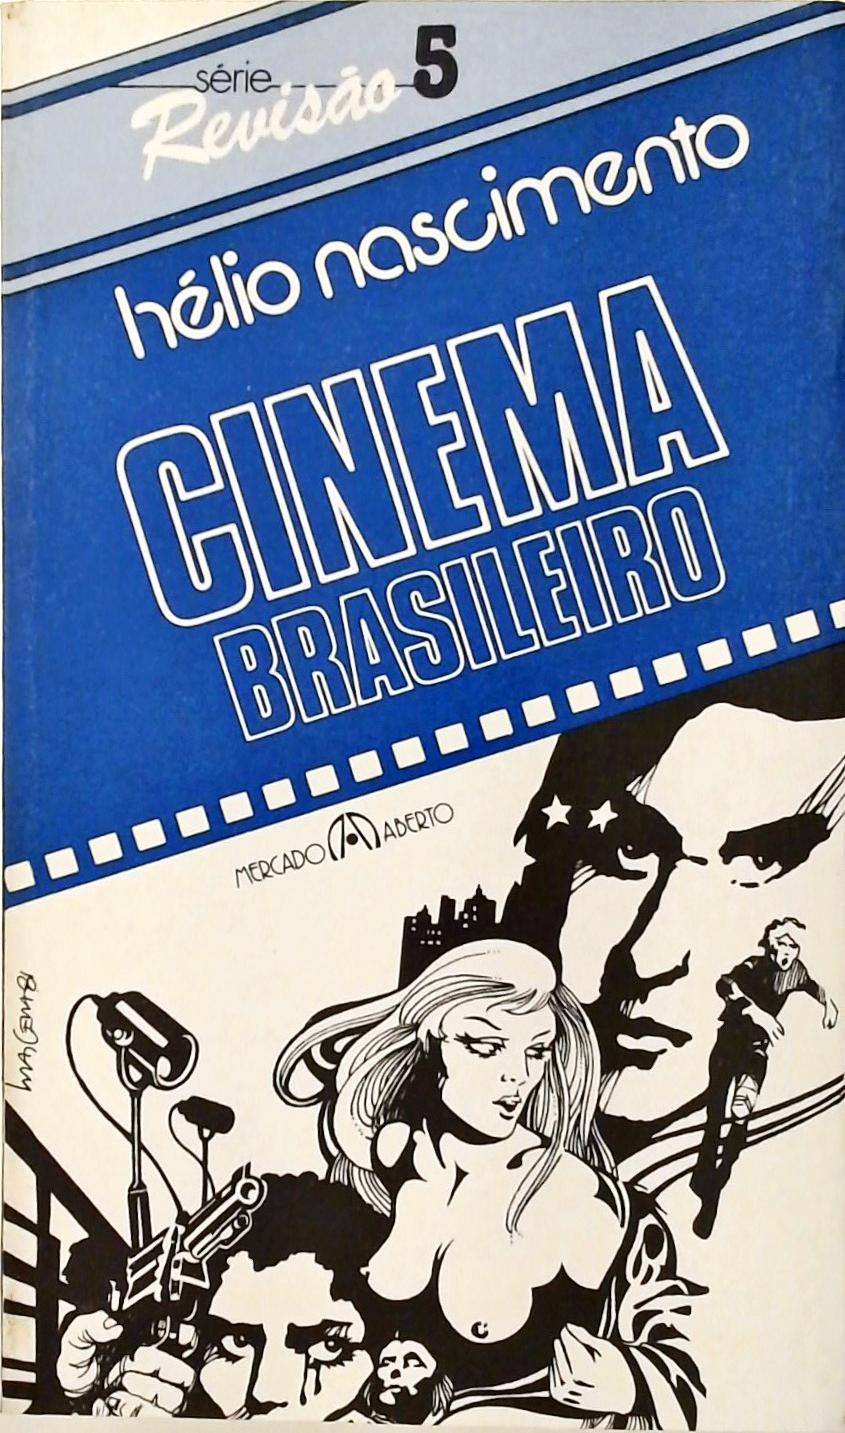 Cinema Brasileiro